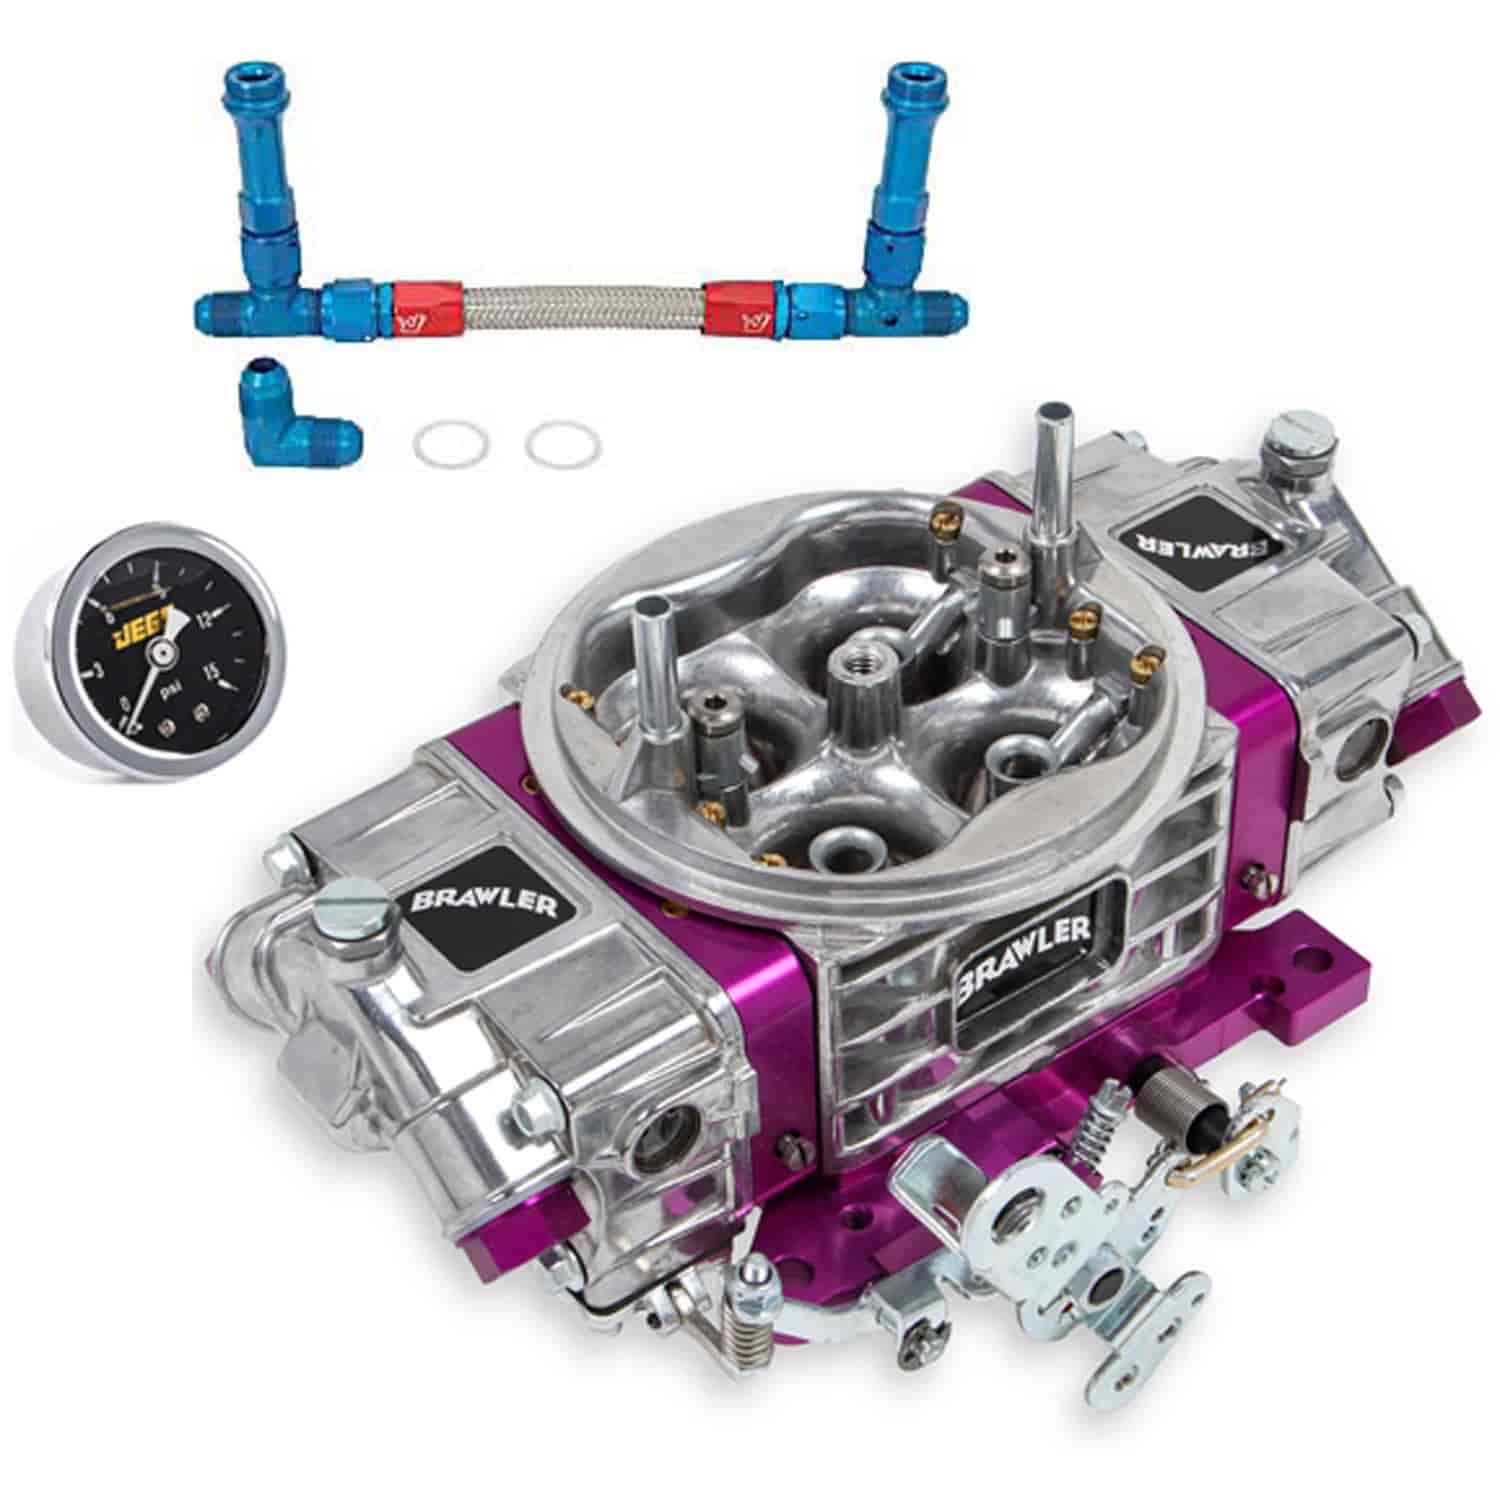 Brawler Race Mechanical Secondary Carburetor Kit 950 CFM